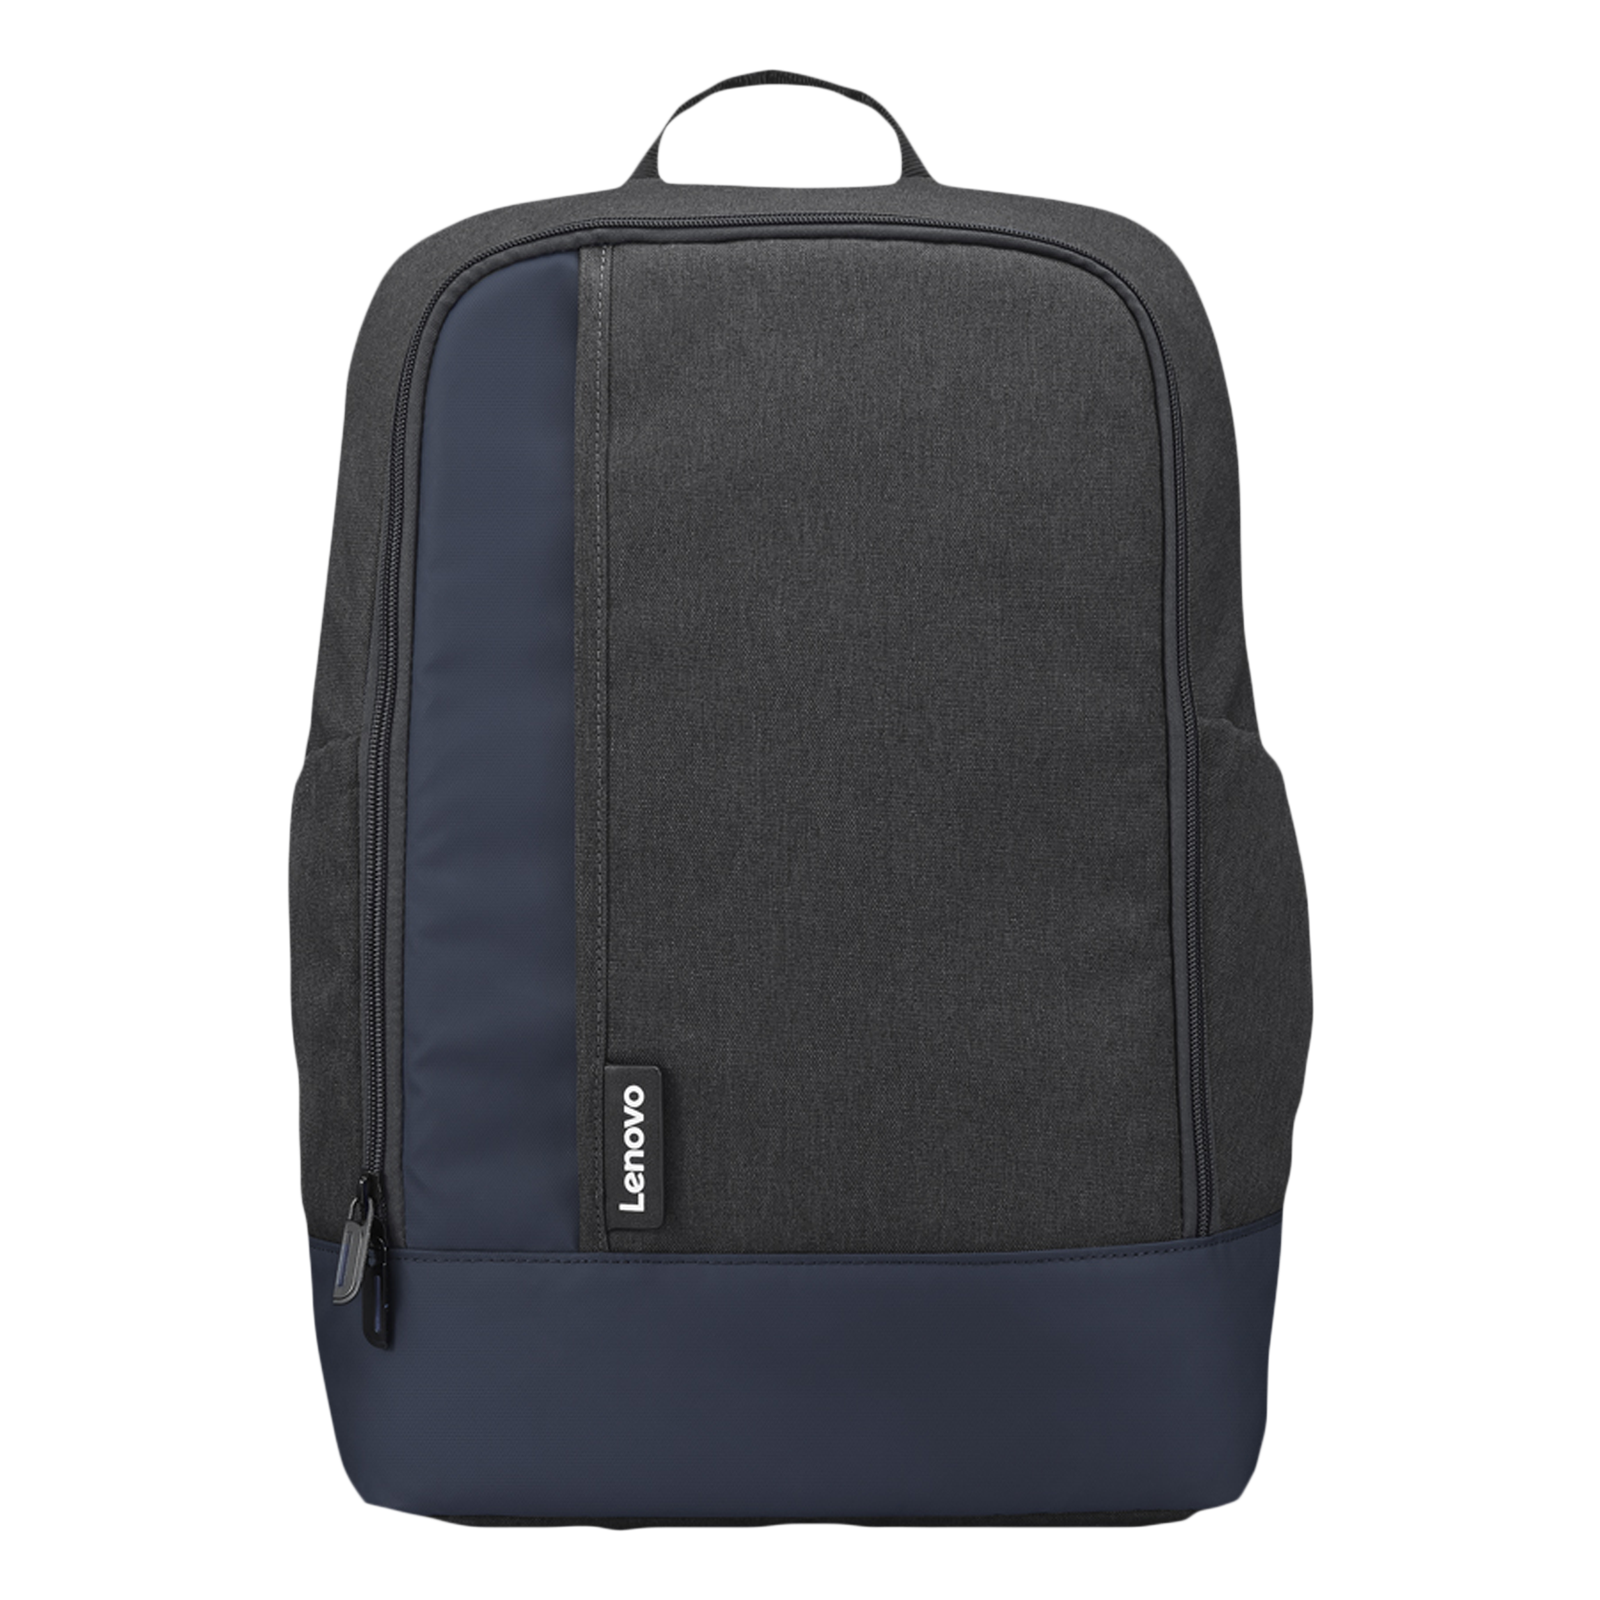 Update more than 67 thinkpad laptop bag super hot - in.duhocakina